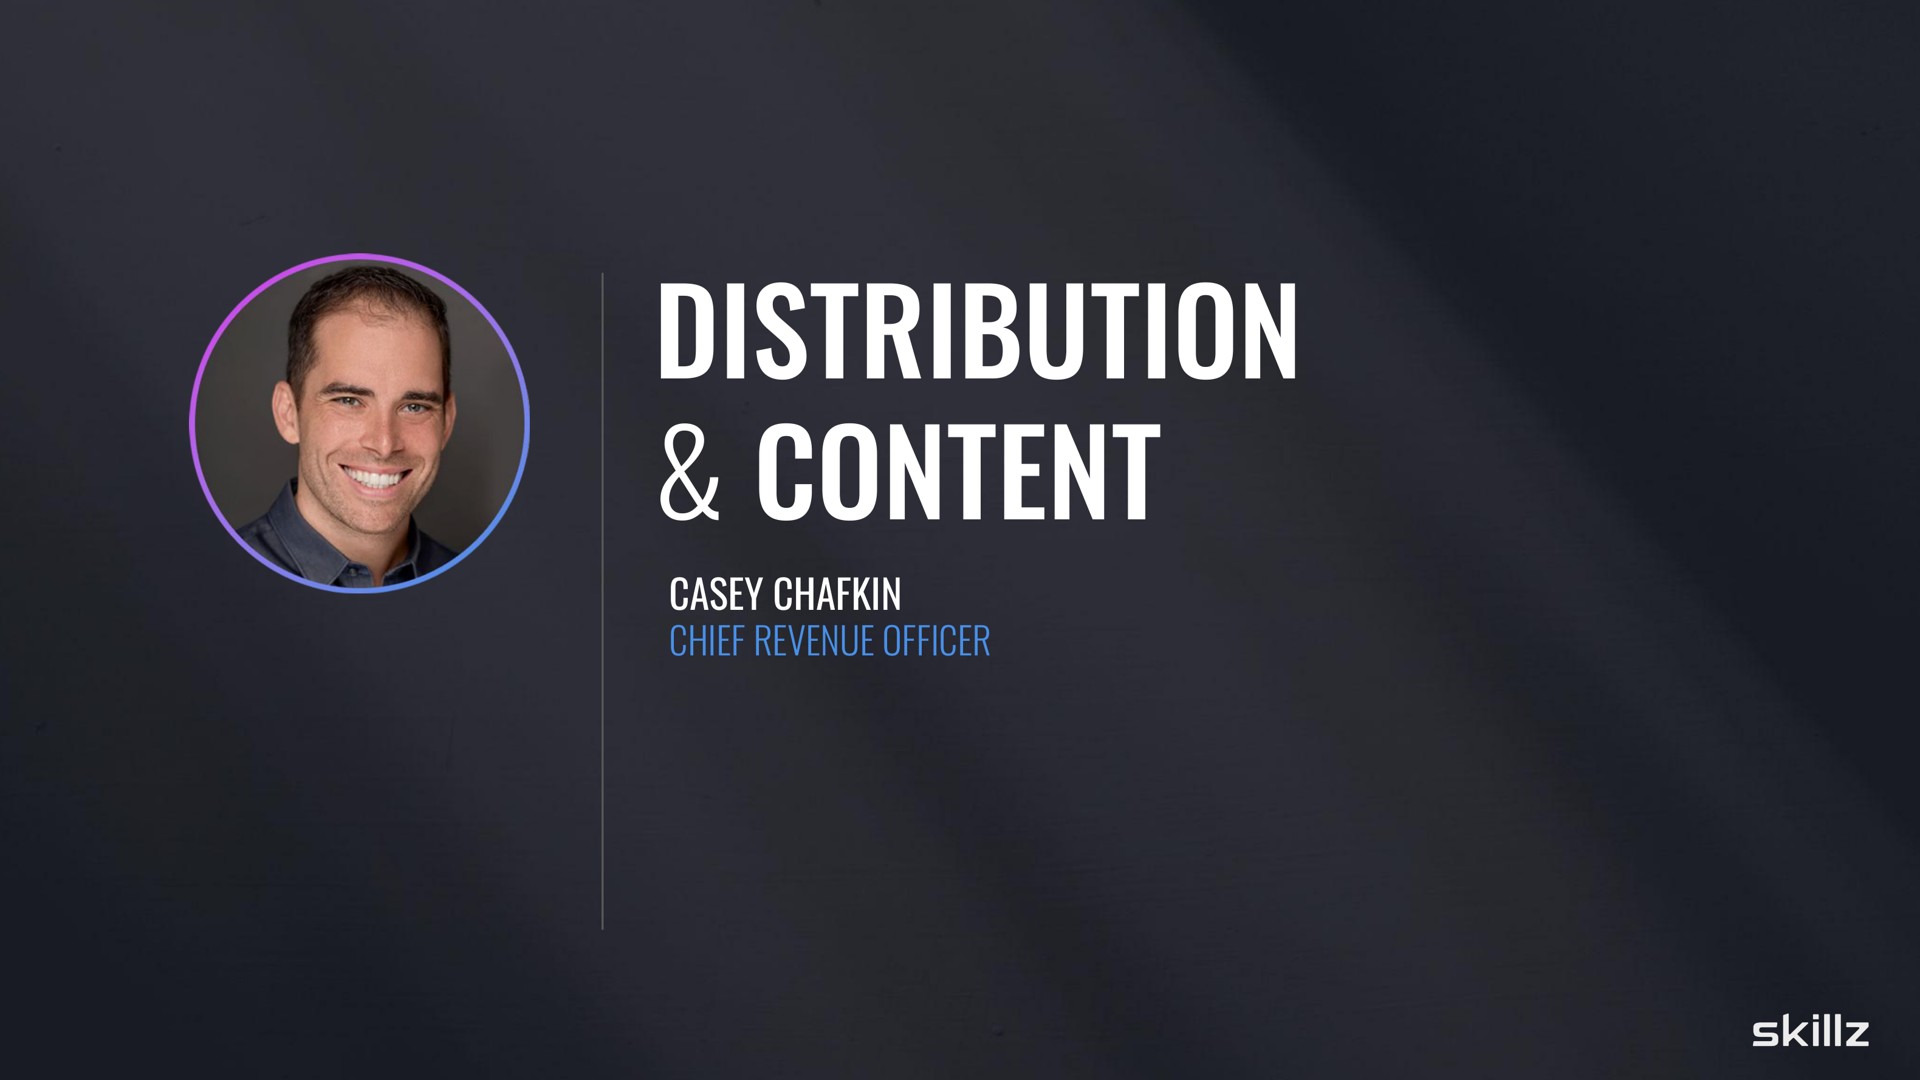 distribution content | Skillz